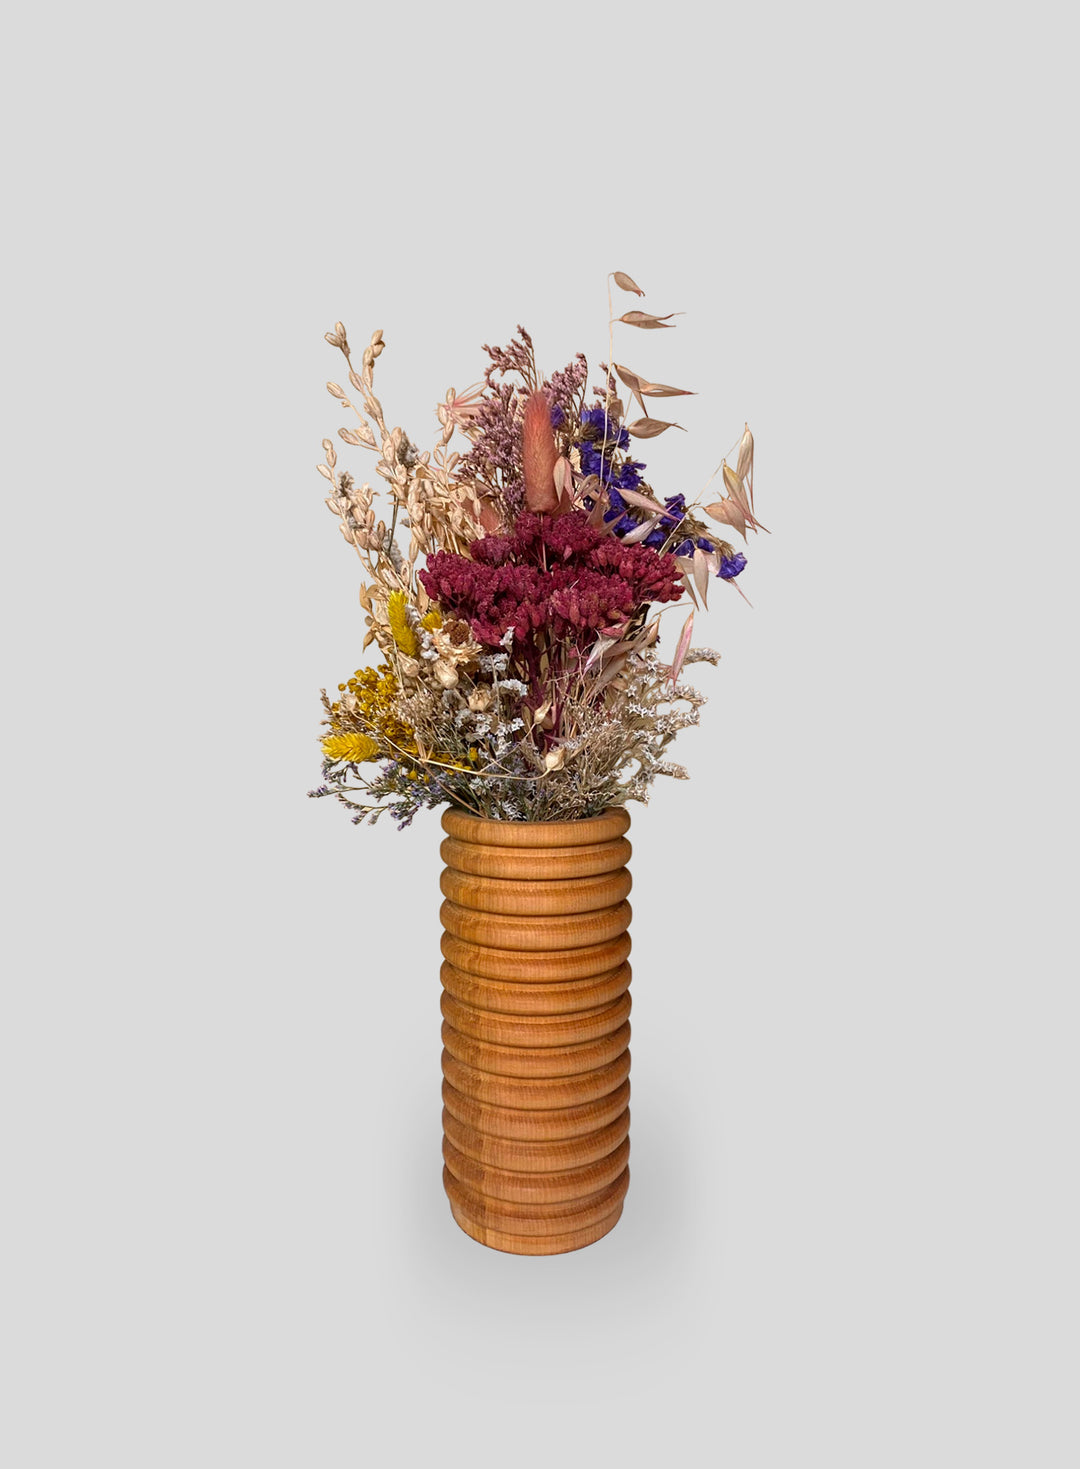 The Puffer Vase in Fireland Cherry